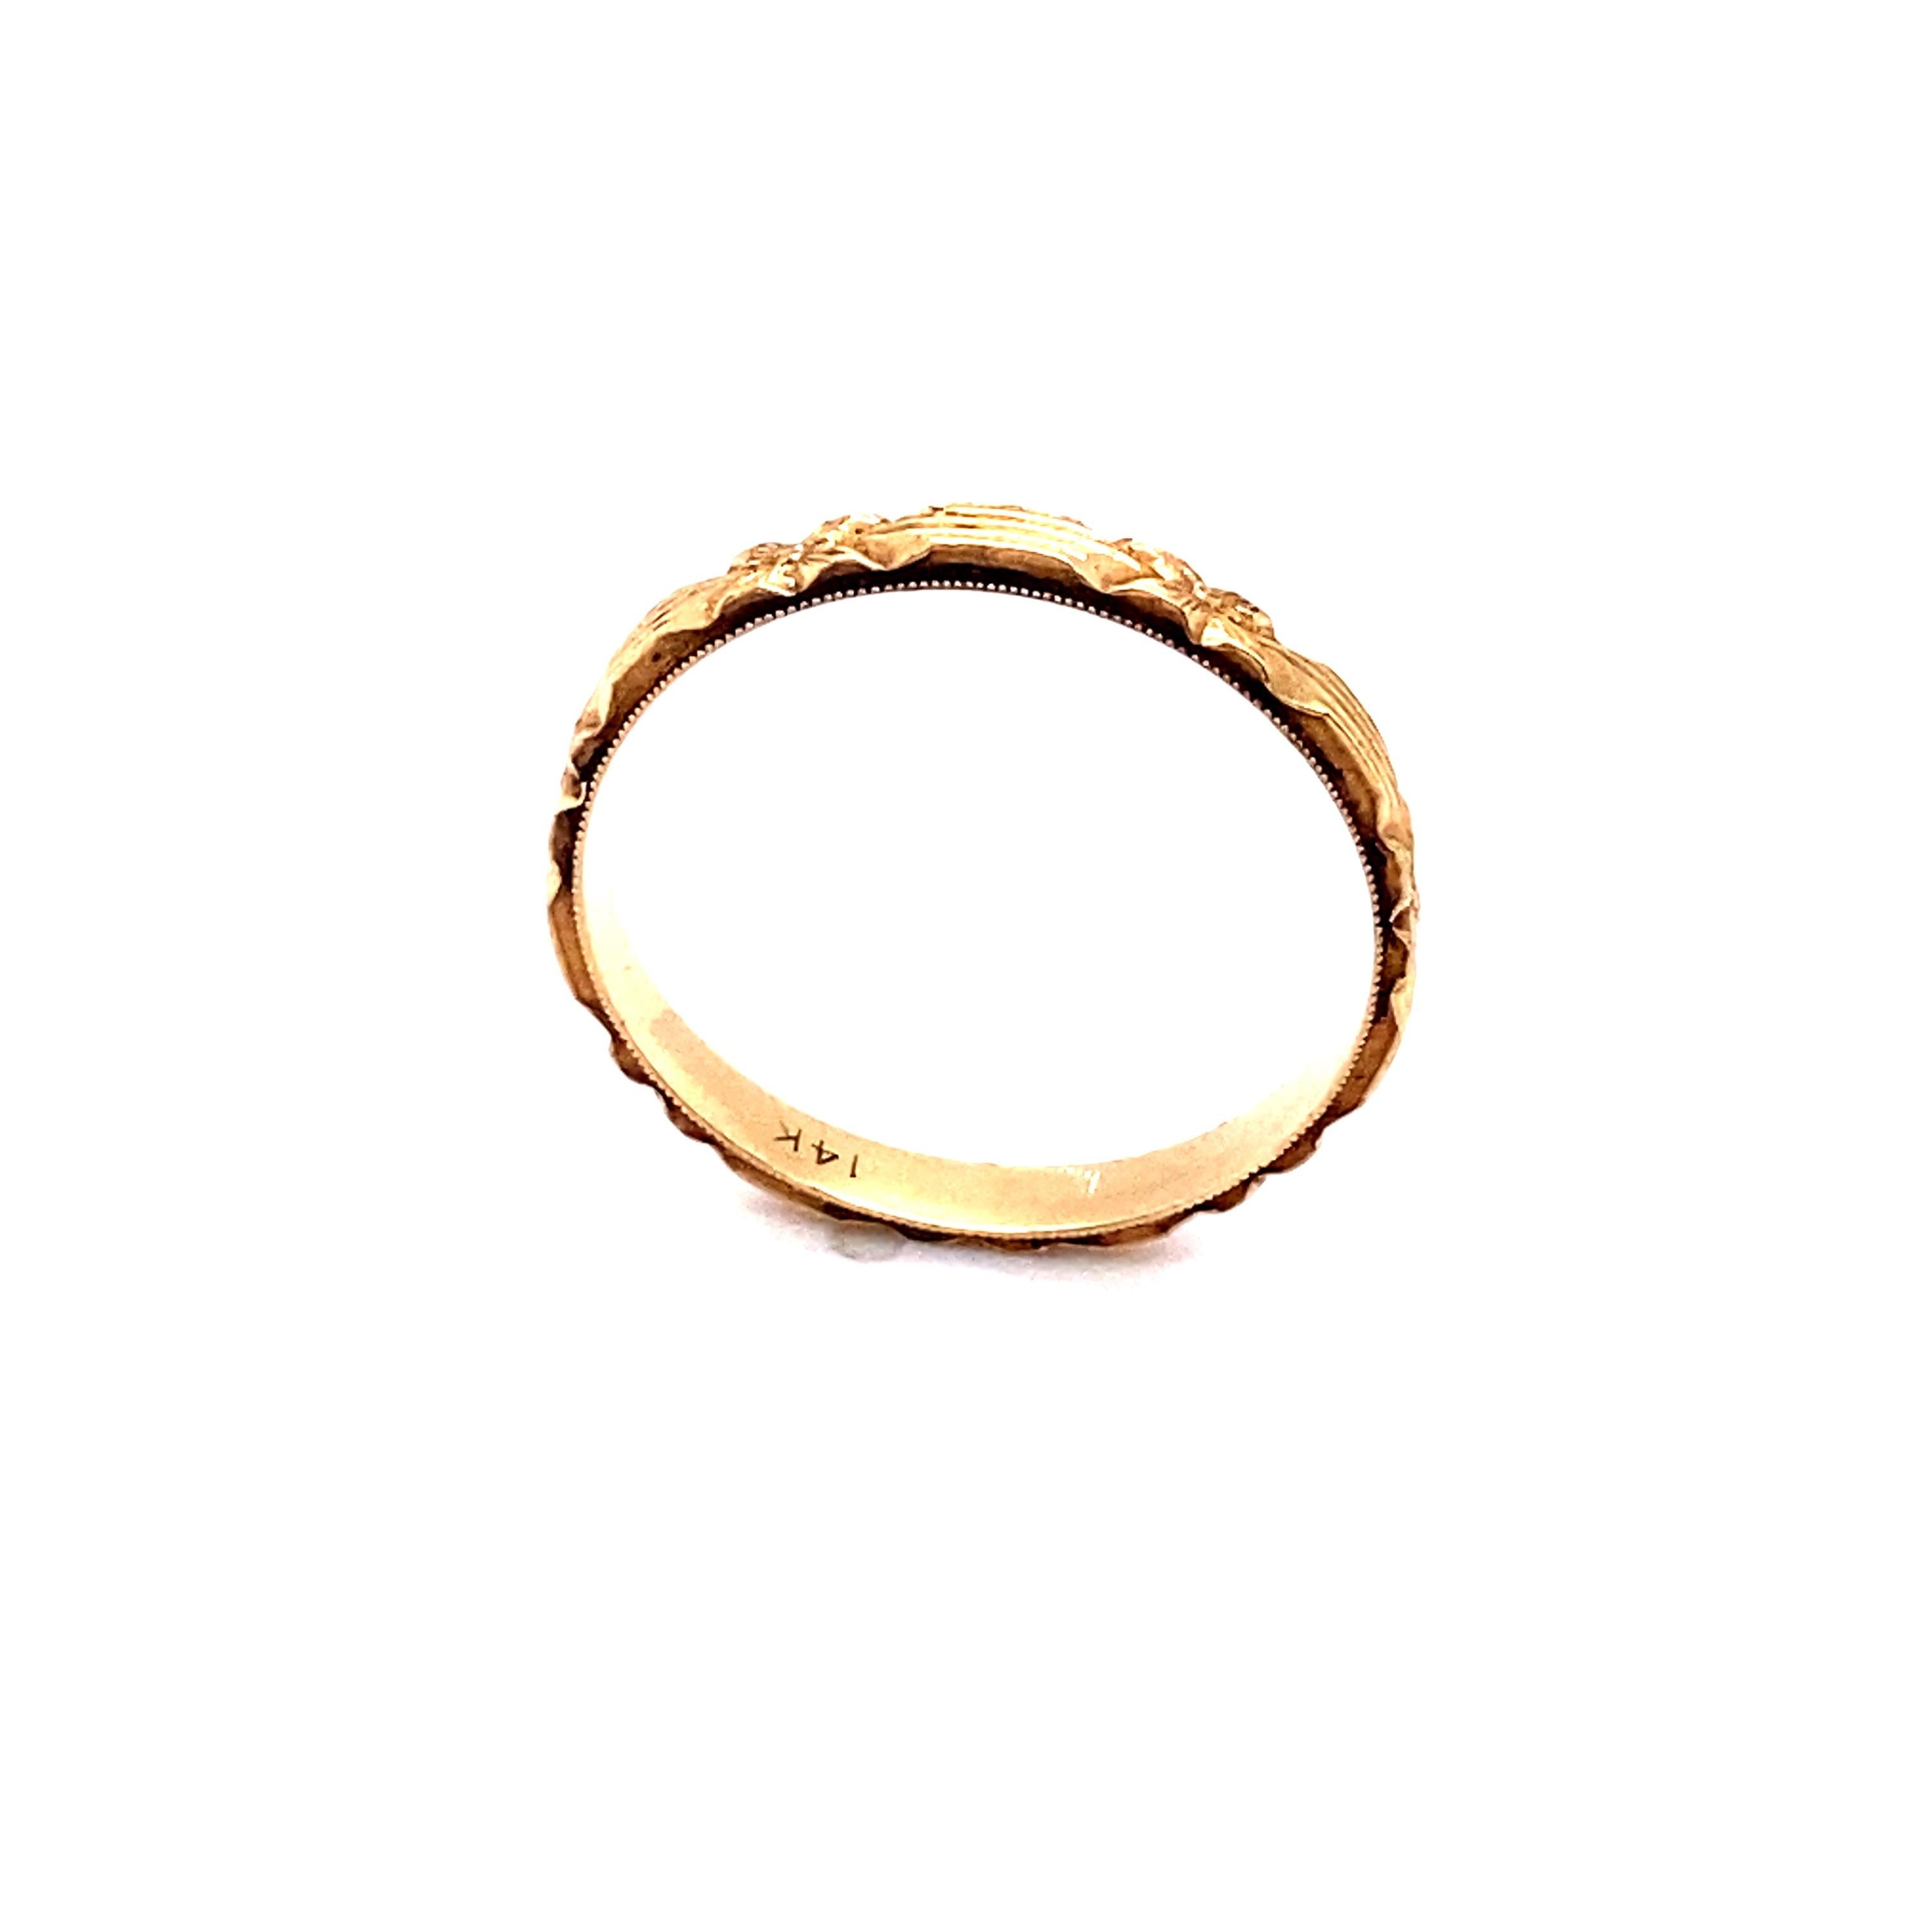 Circa: 1920
Metal Type: 14 Karat Yellow Gold
Weight: 2 grams
Size: 9.25, cannot be resized